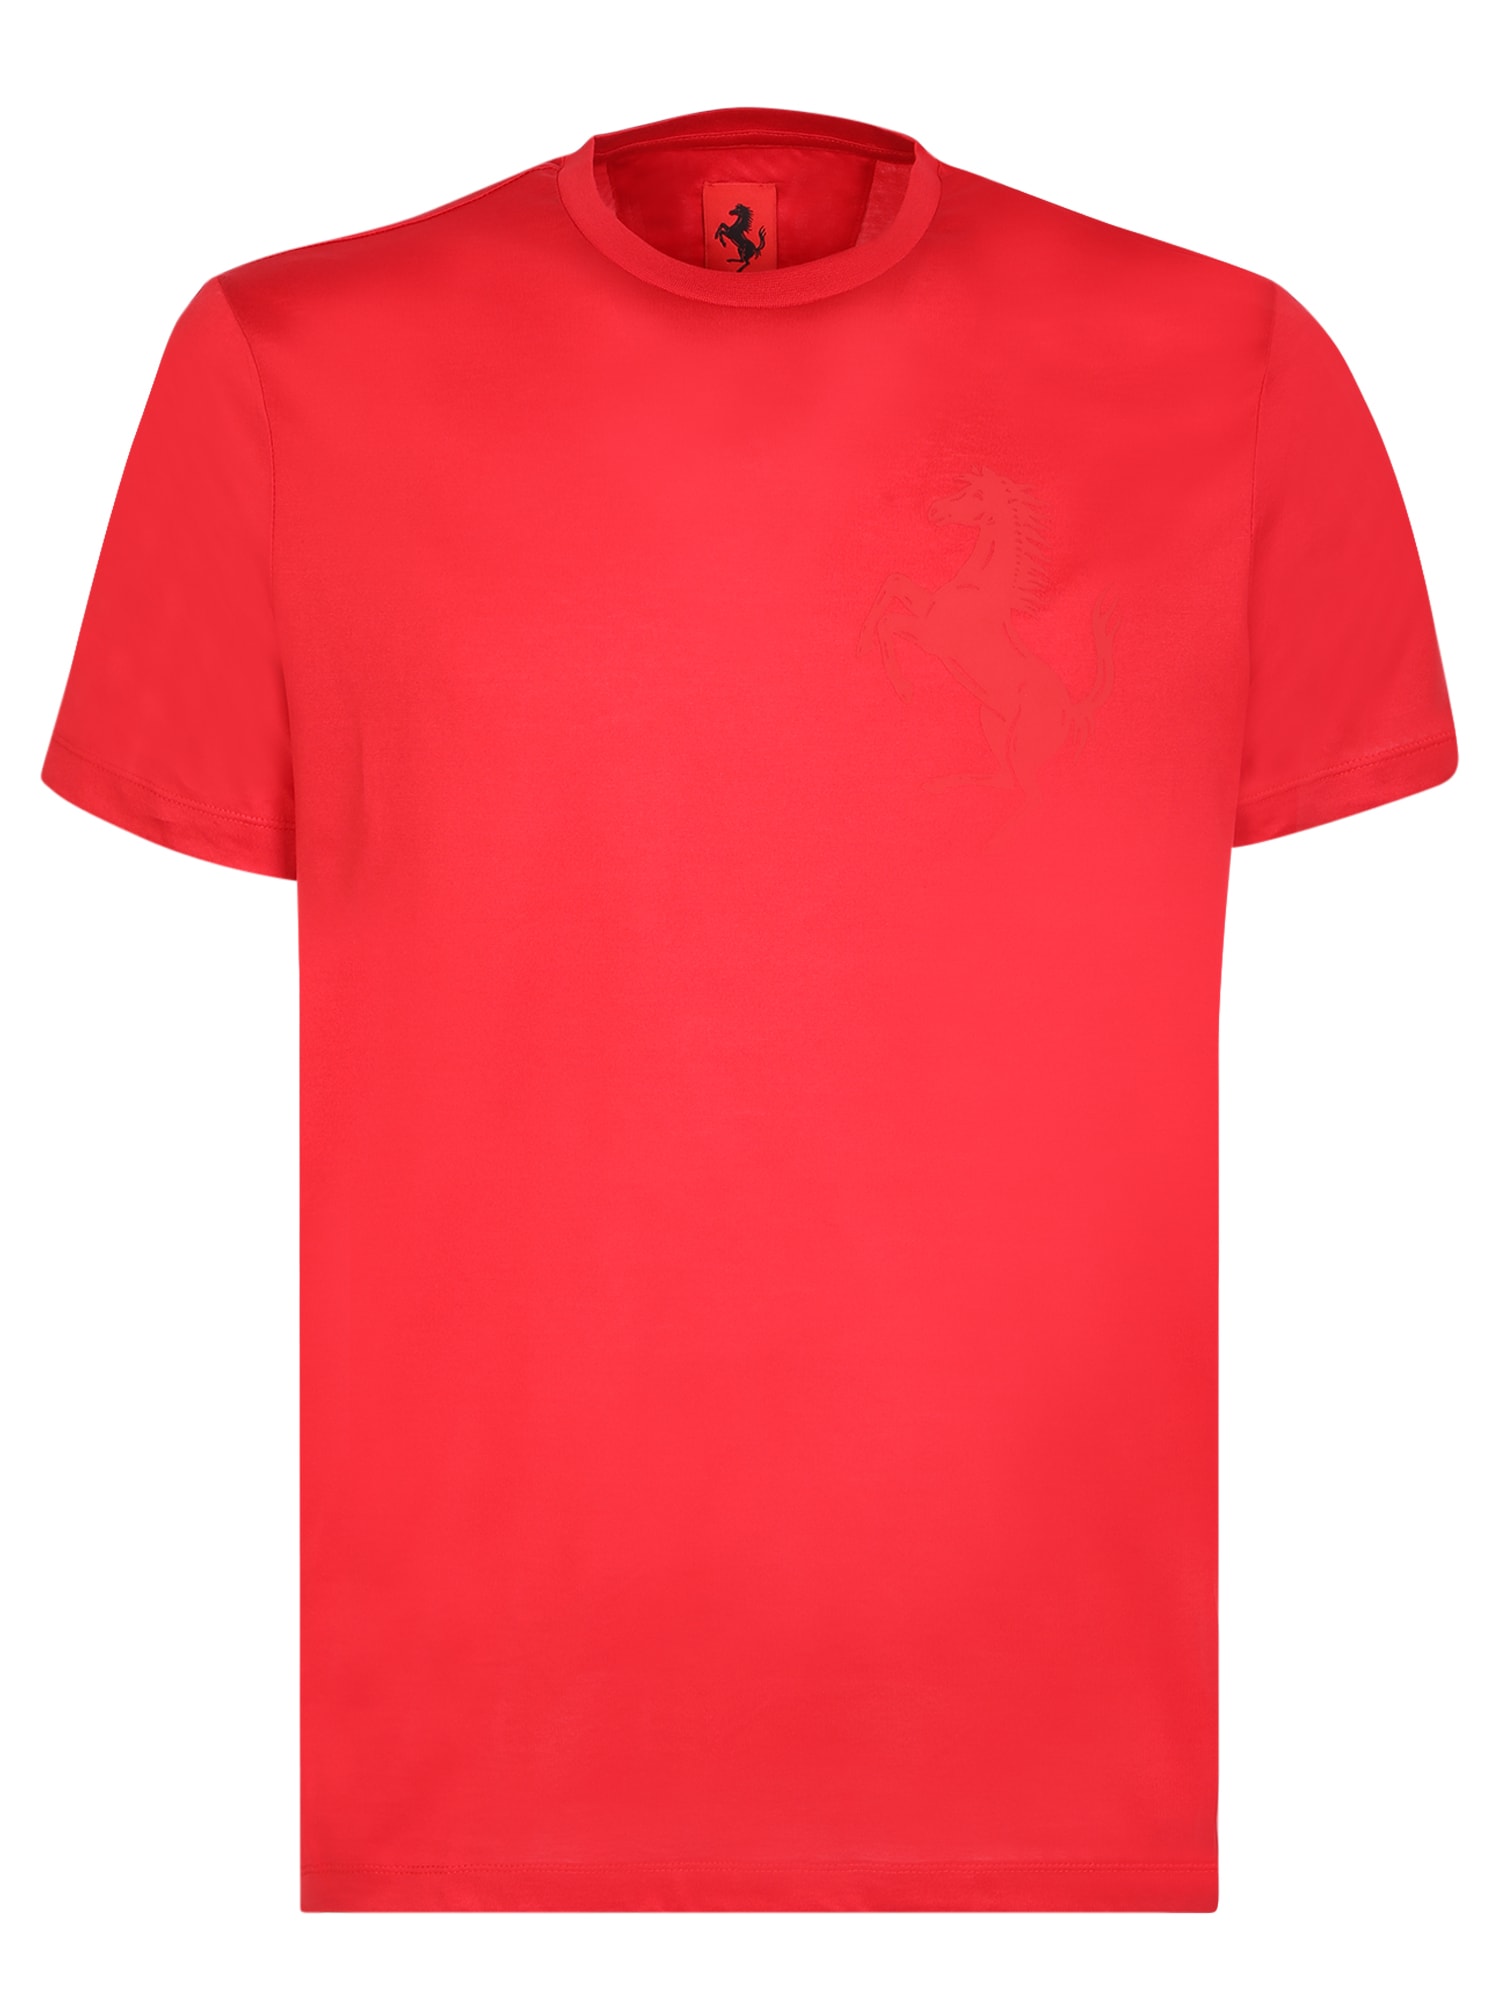 Ferrari Red Cotton T-shirt